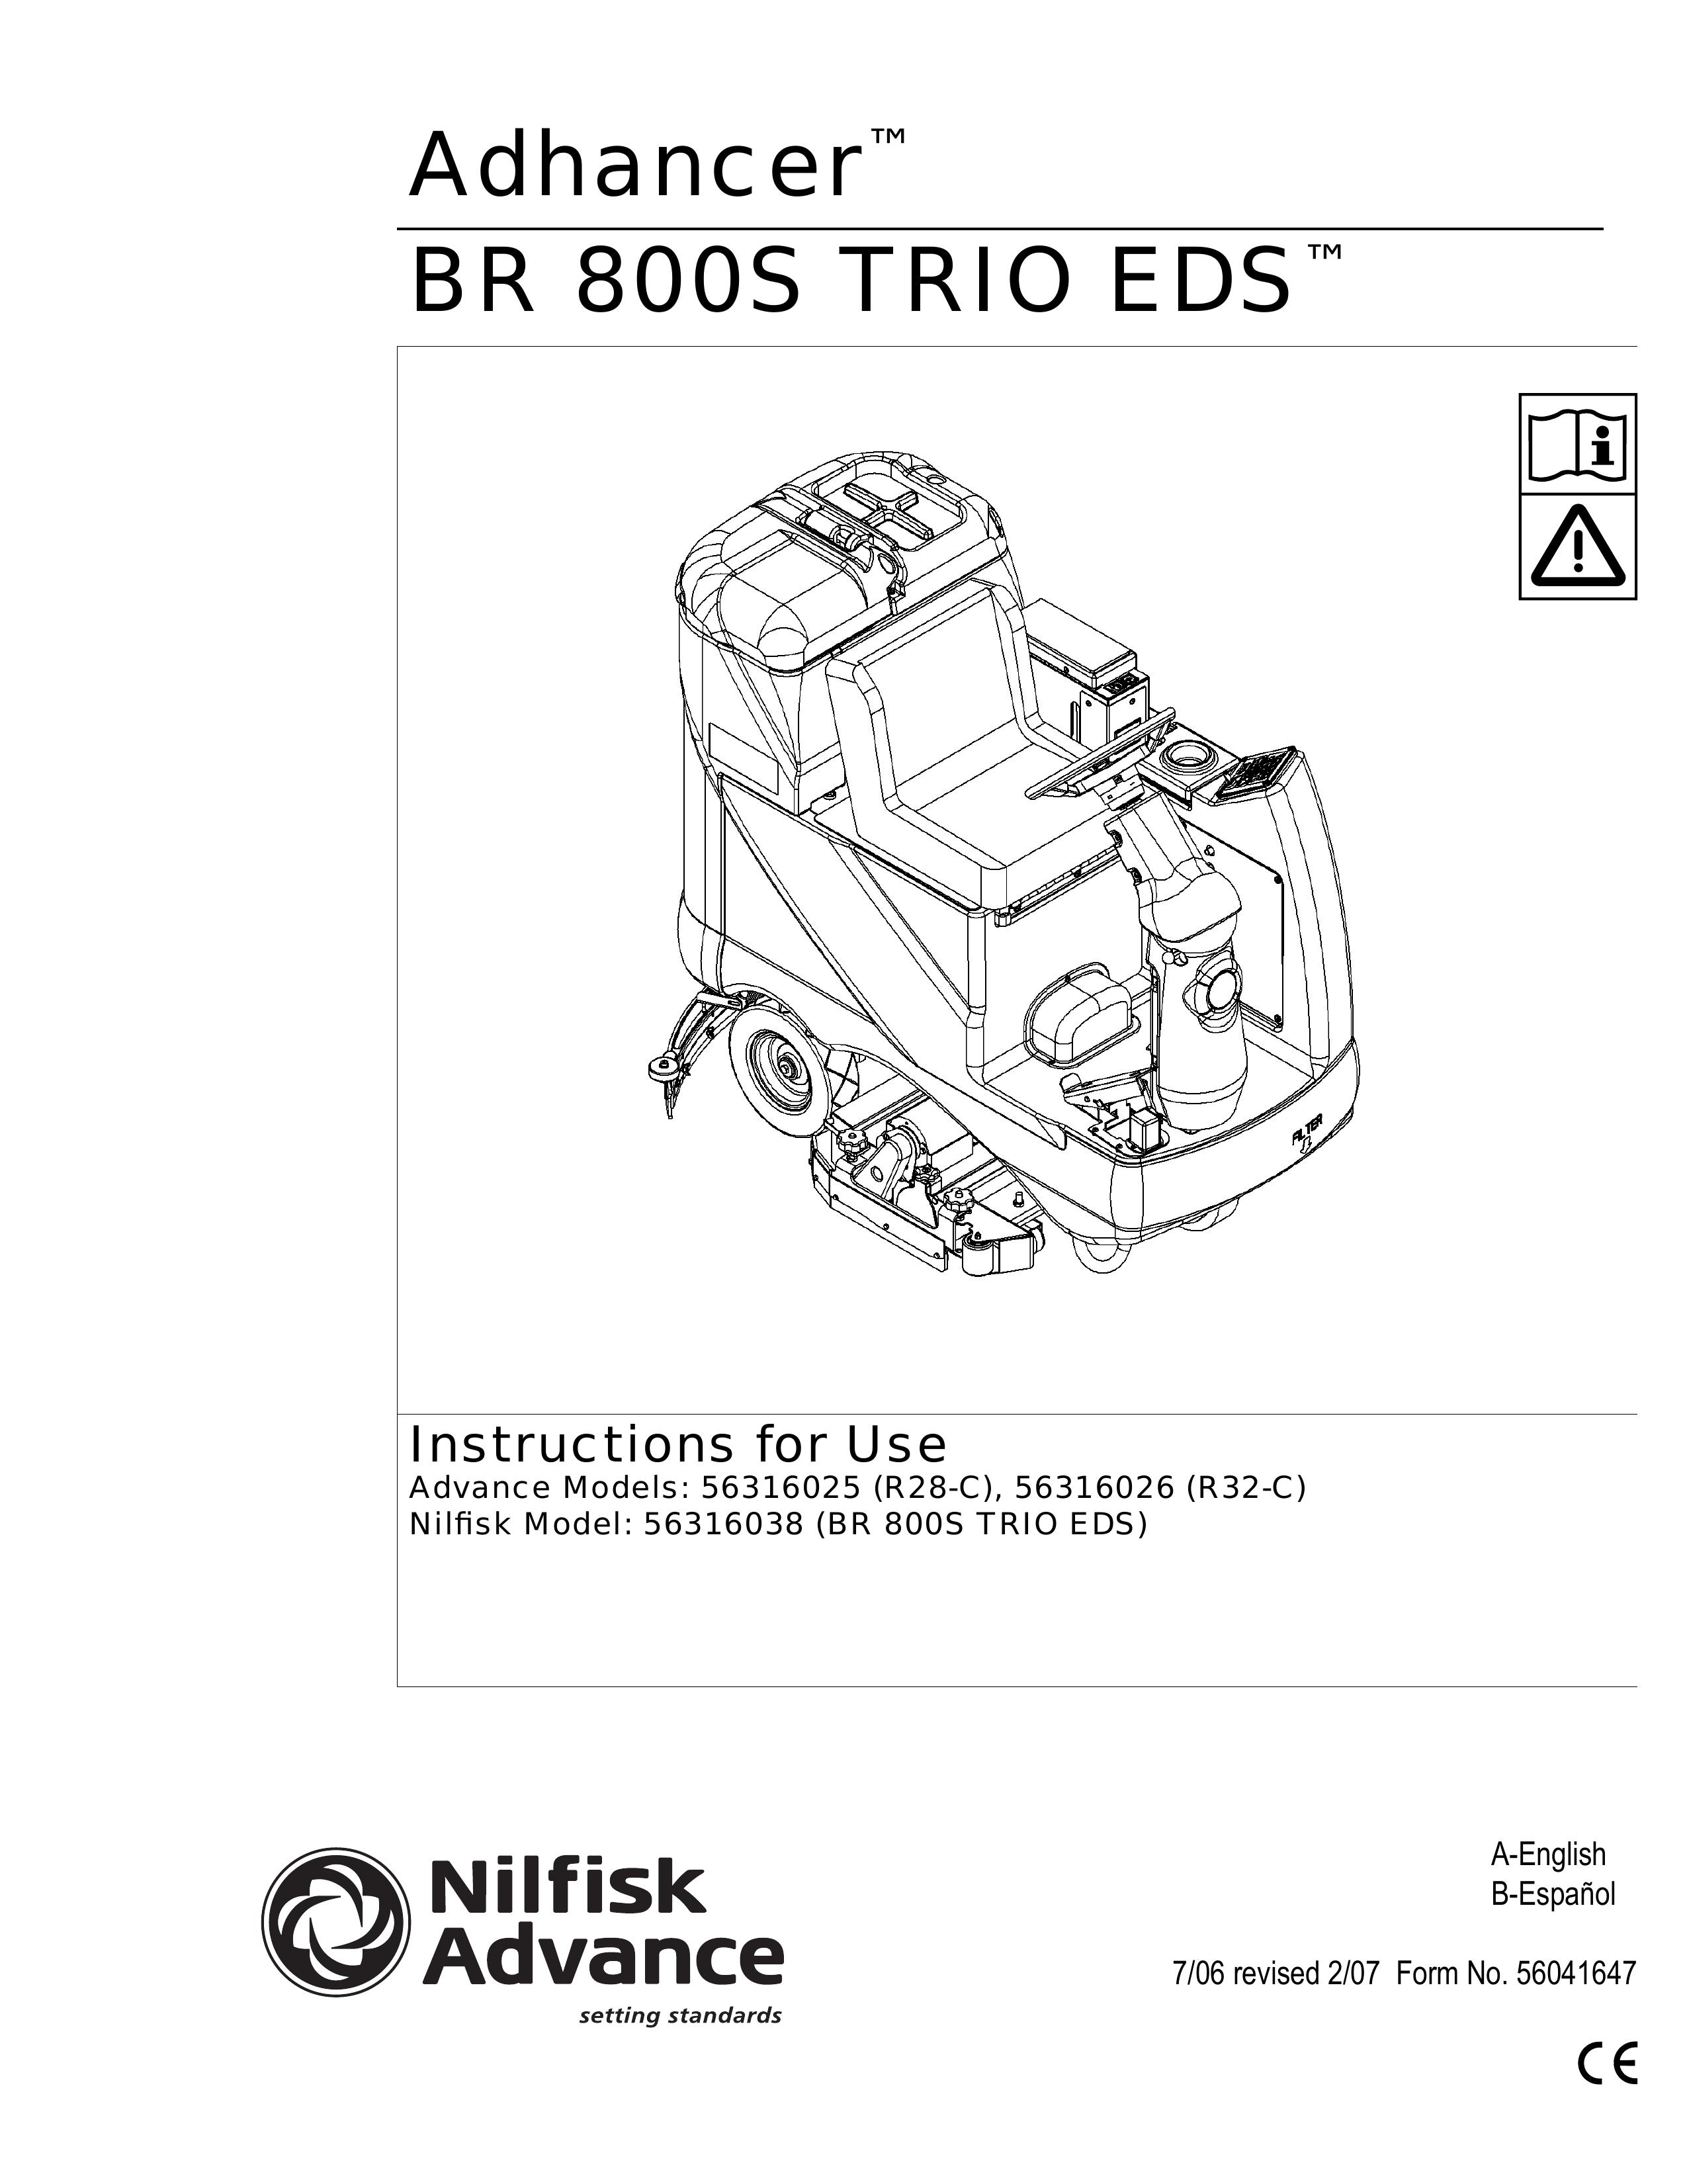 Nilfisk-Advance America 56316026 (R32-C) Lawn Sweeper User Manual